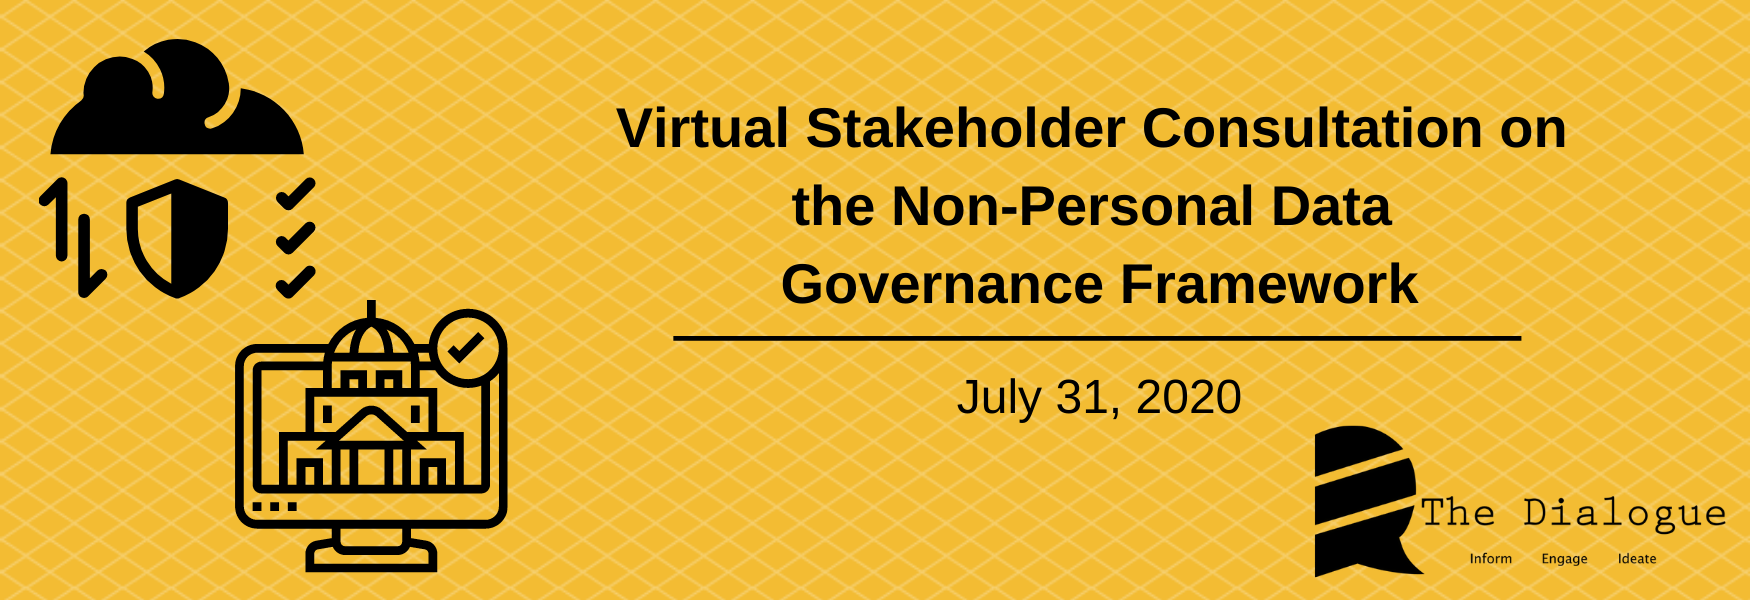 Virtual Stakeholder Consultation on Non-Personal Data Governance